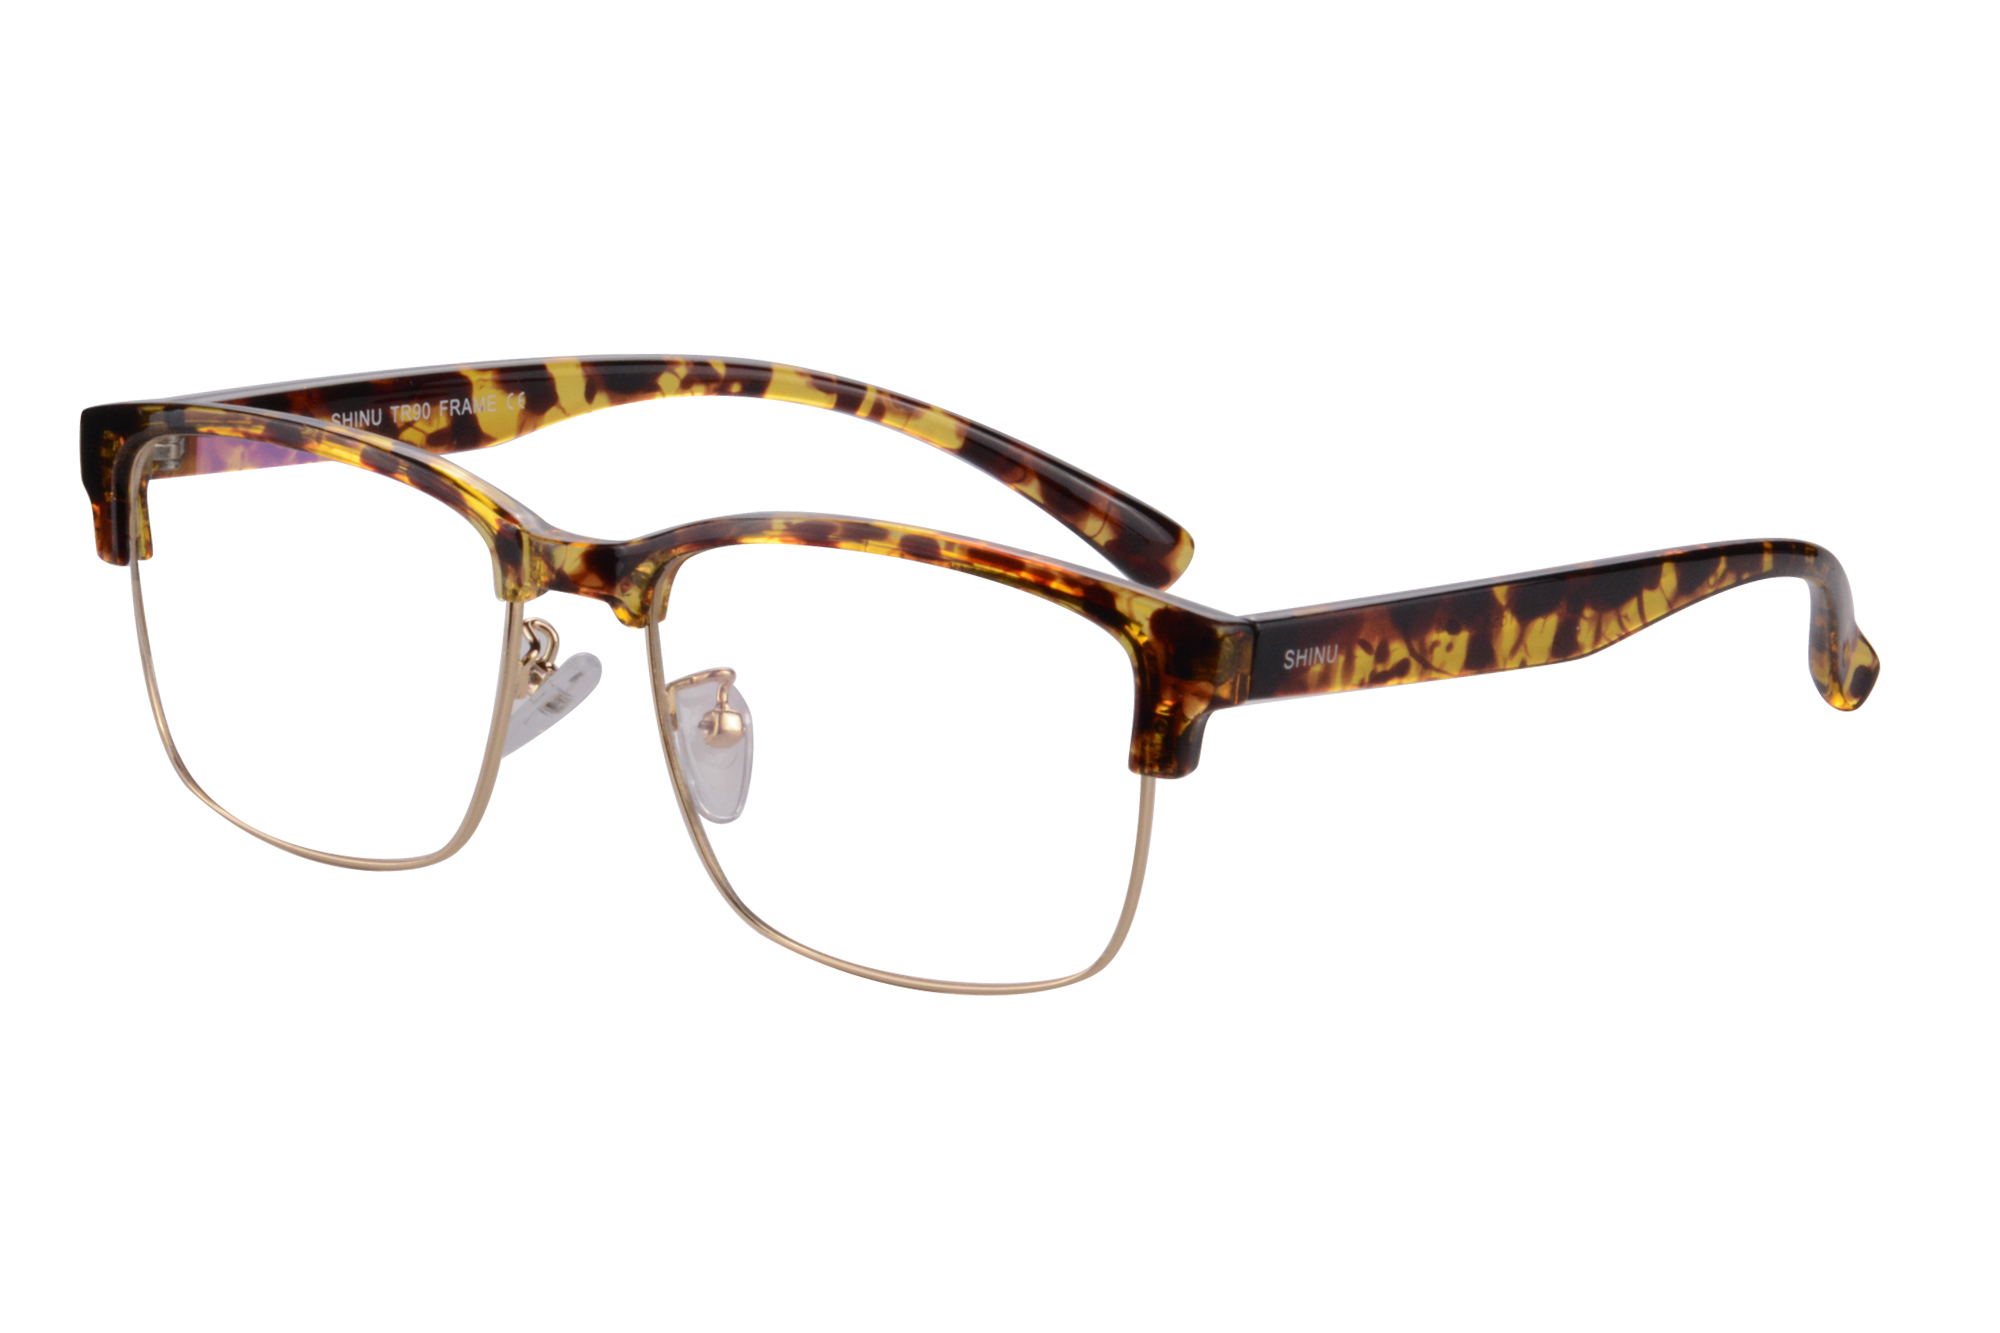 MEDOLONG Anti Blue Light Mens Progressive Multifocus Reading Glasses Multiple Focus Eyewear-RG32